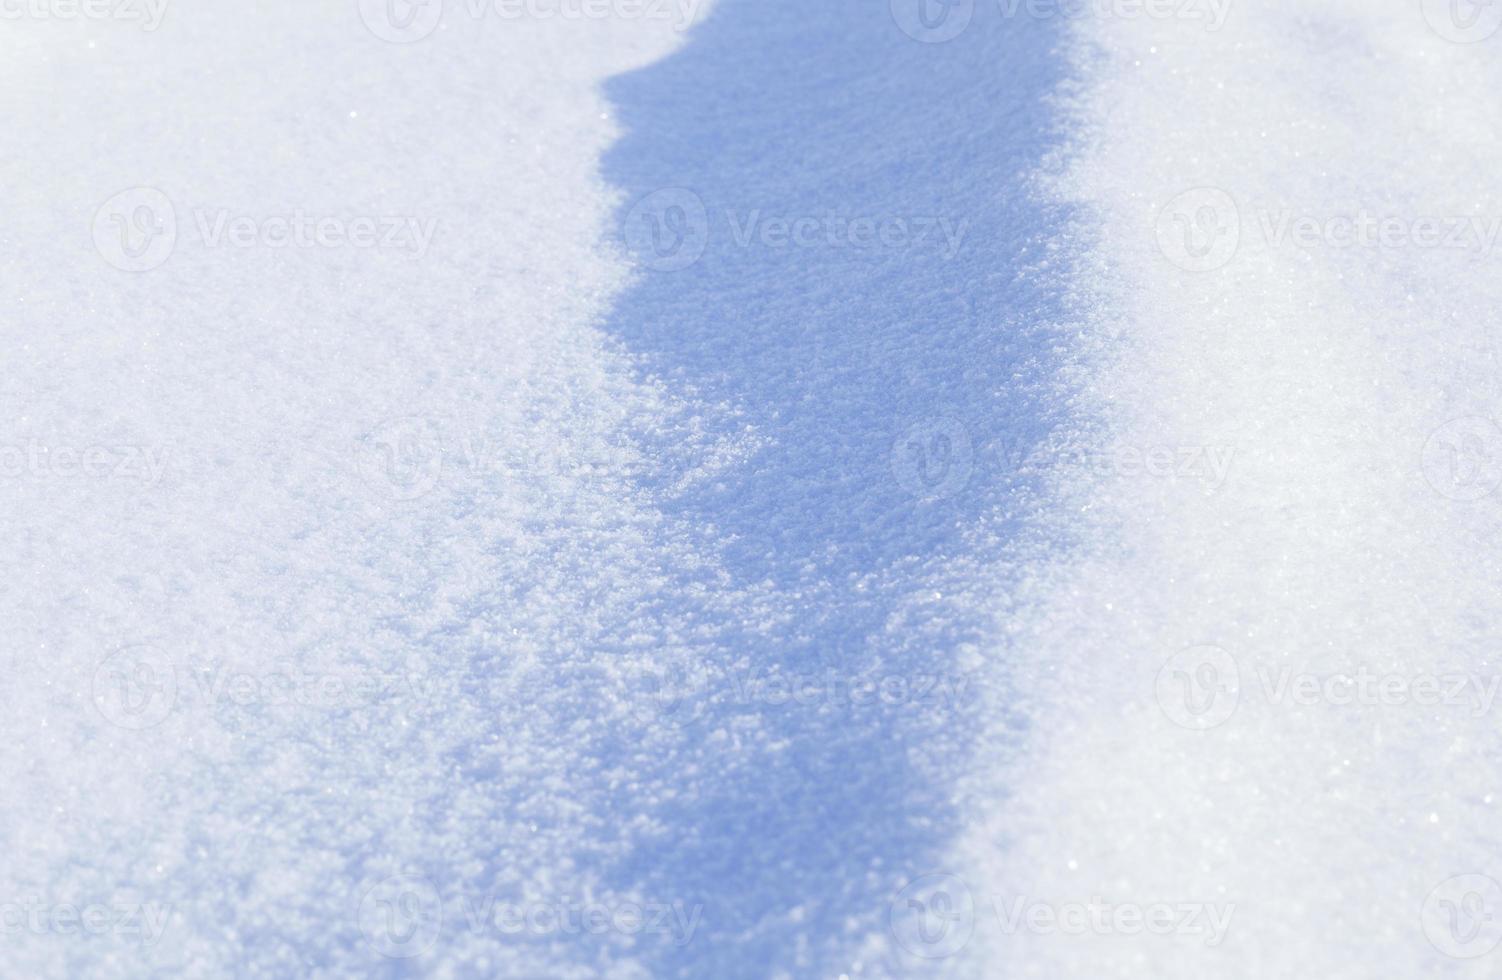 snow drifts, close up photo